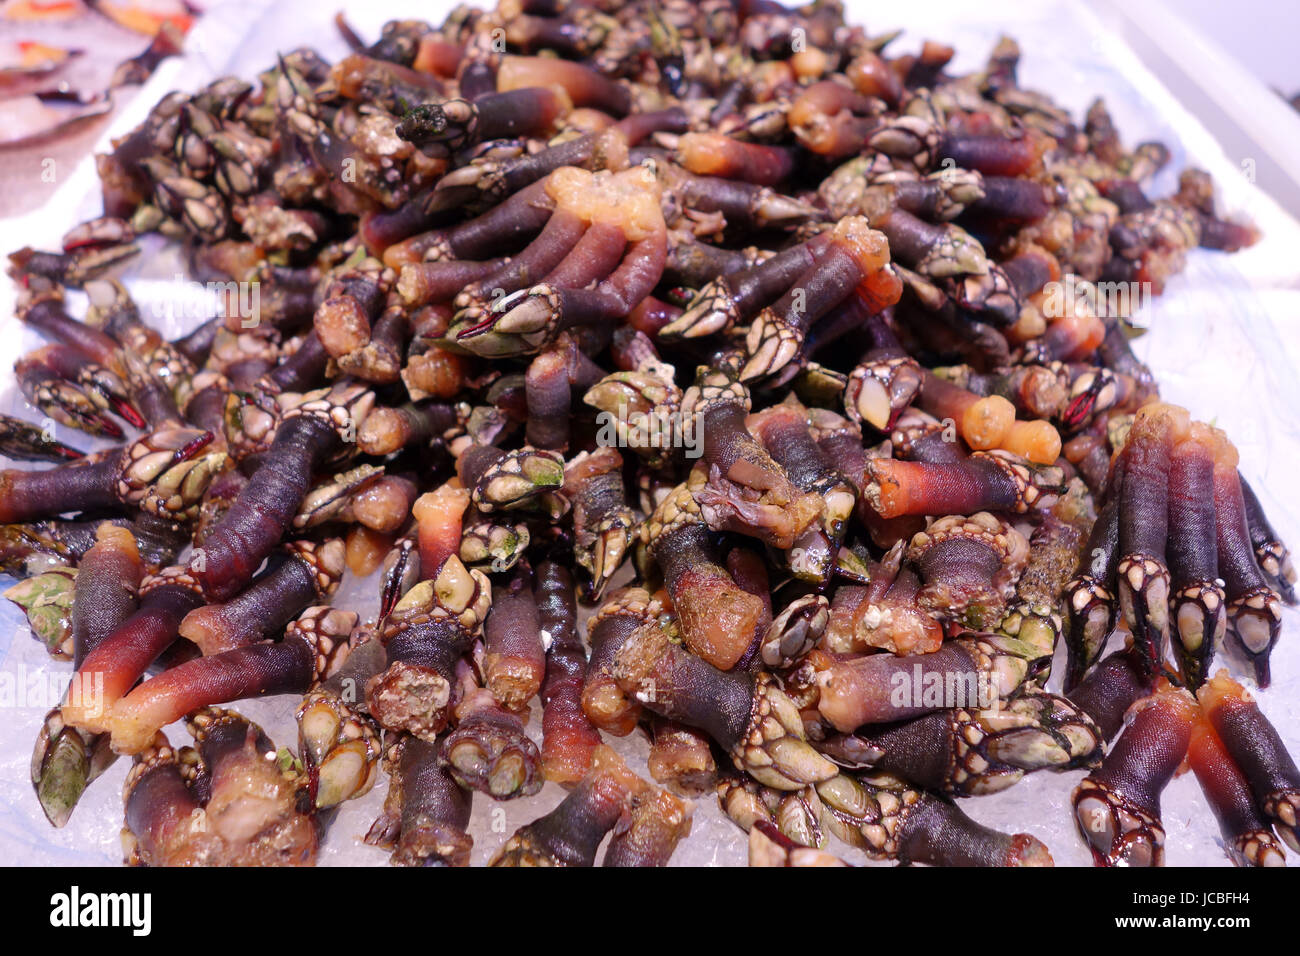 Percebe and Shellfish on sale at Santander fish market in Northern Spain Stock Photo